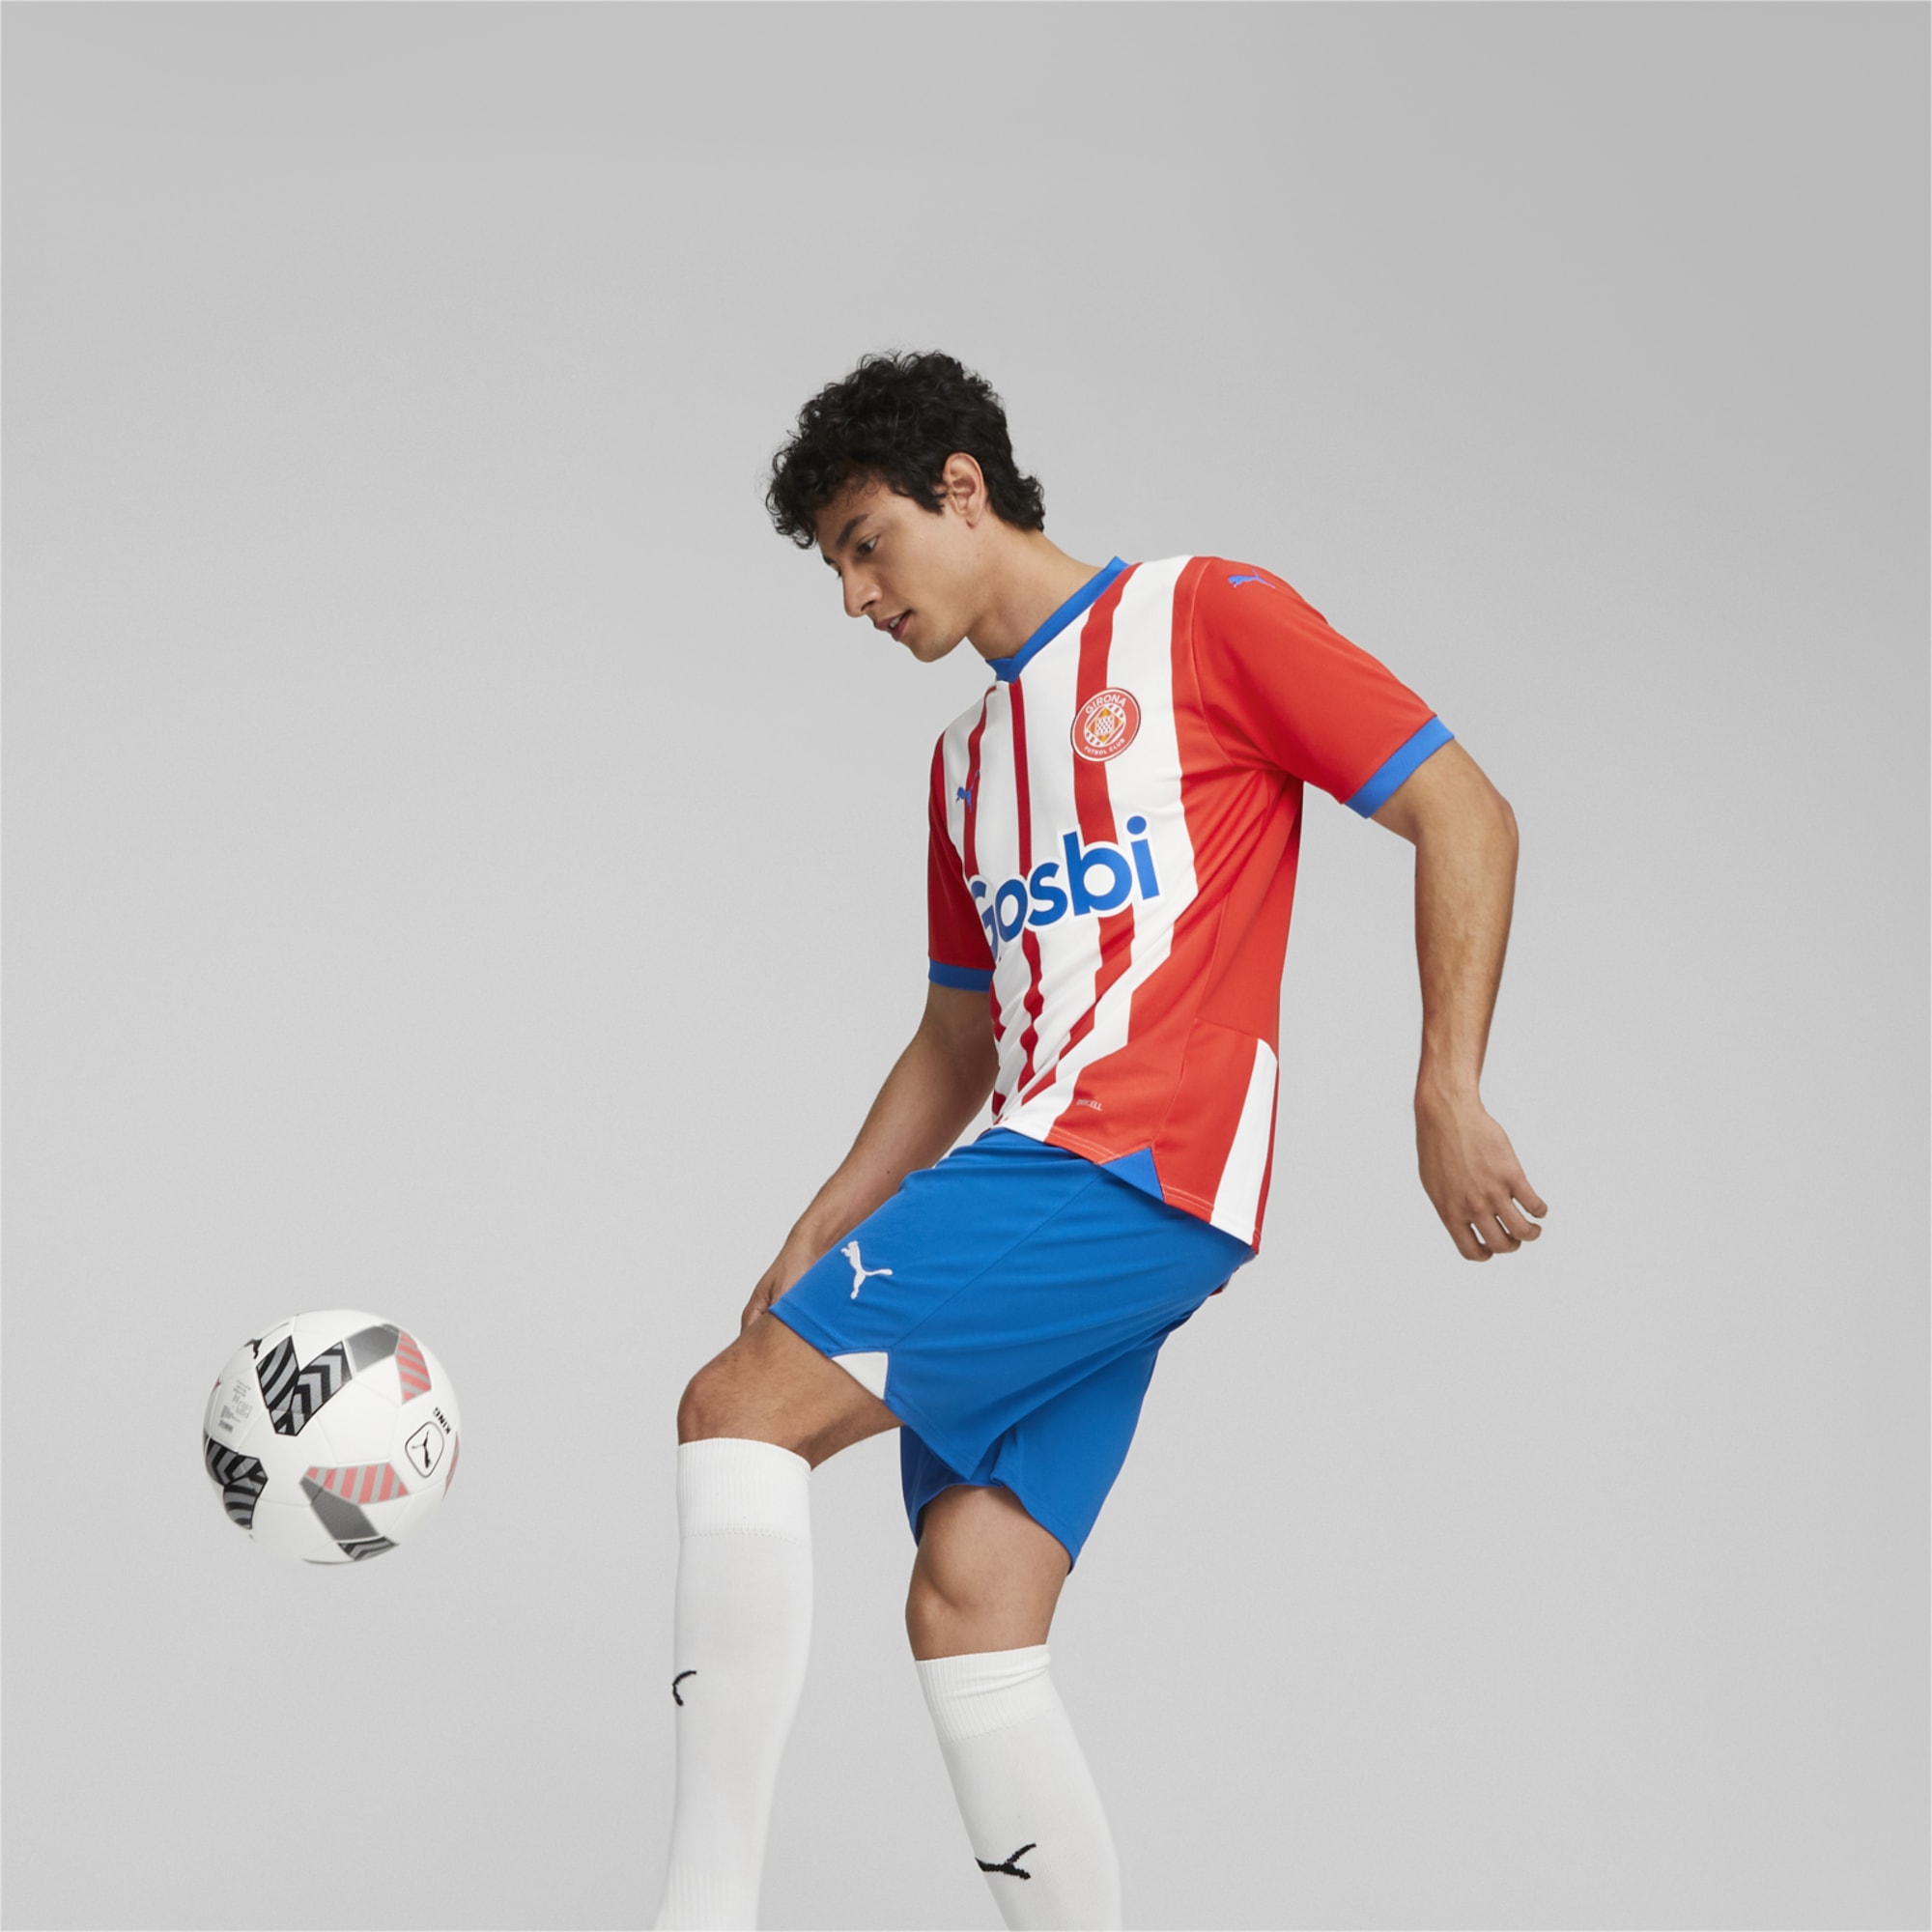 Men's PUMA Girona FC Football Shorts, Royal Blue, Size XL, Clothing